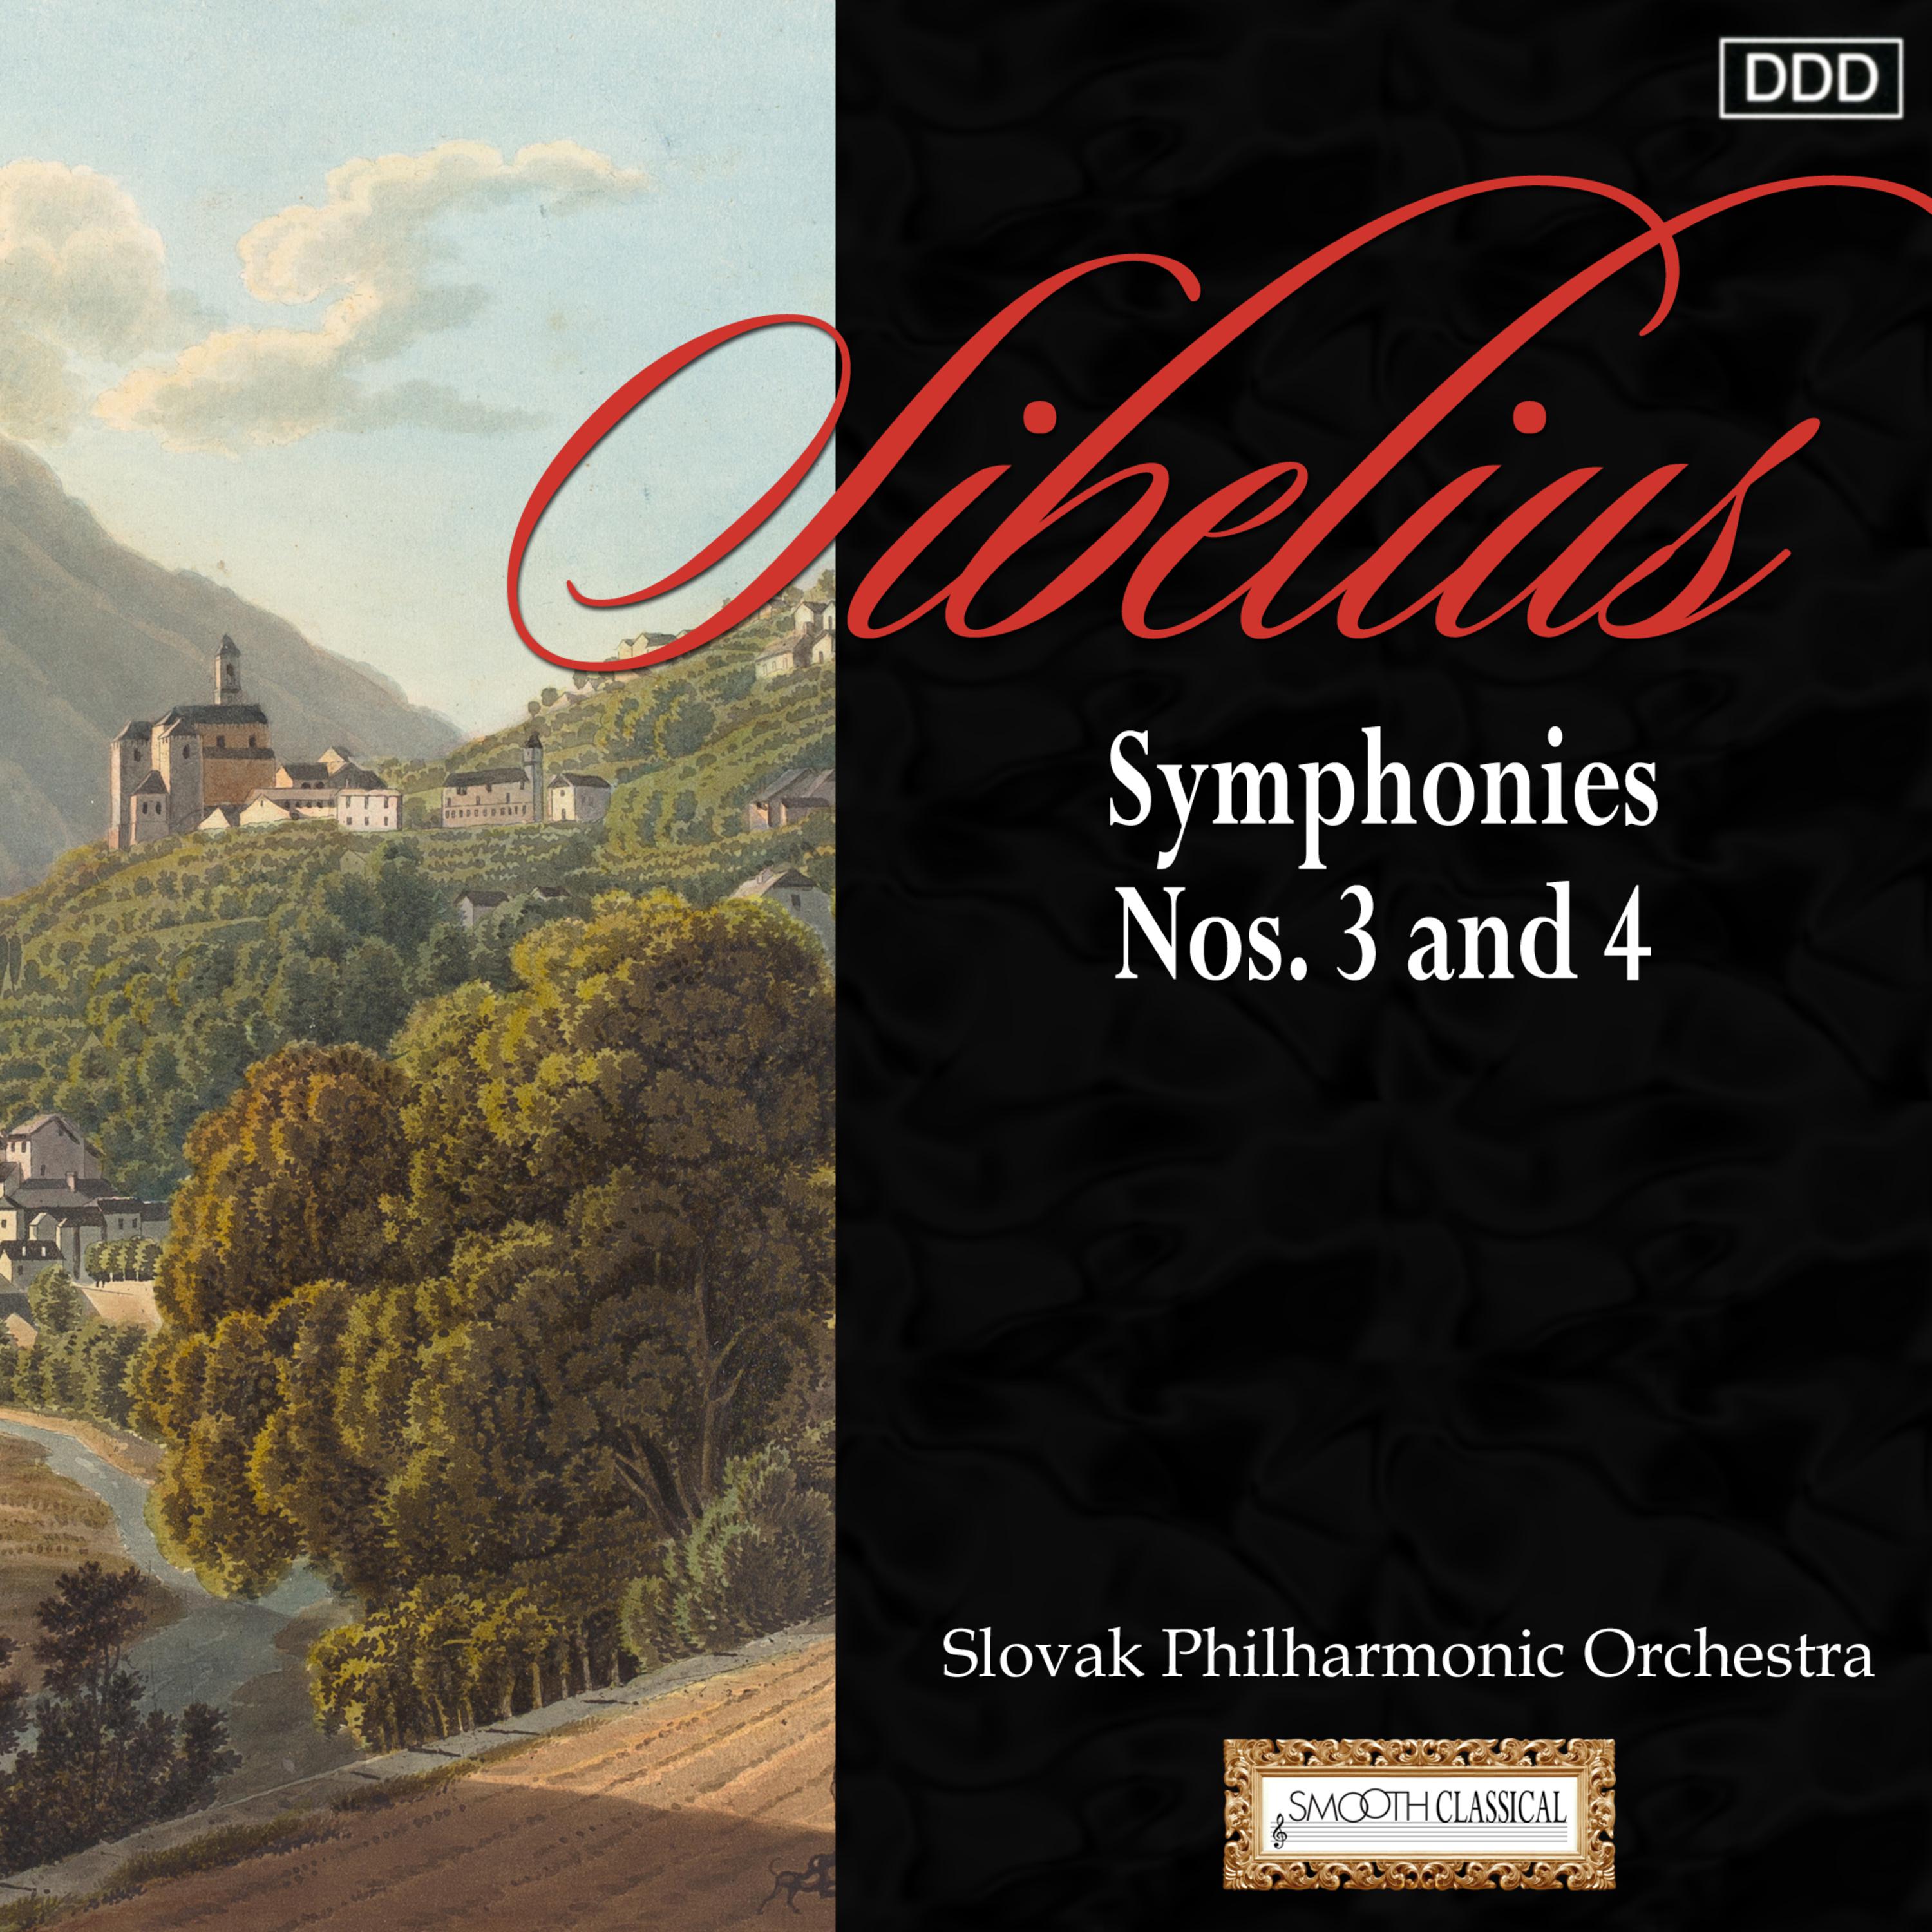 Symphony No. 3 in C Major, Op. 52: I. Allegro moderato